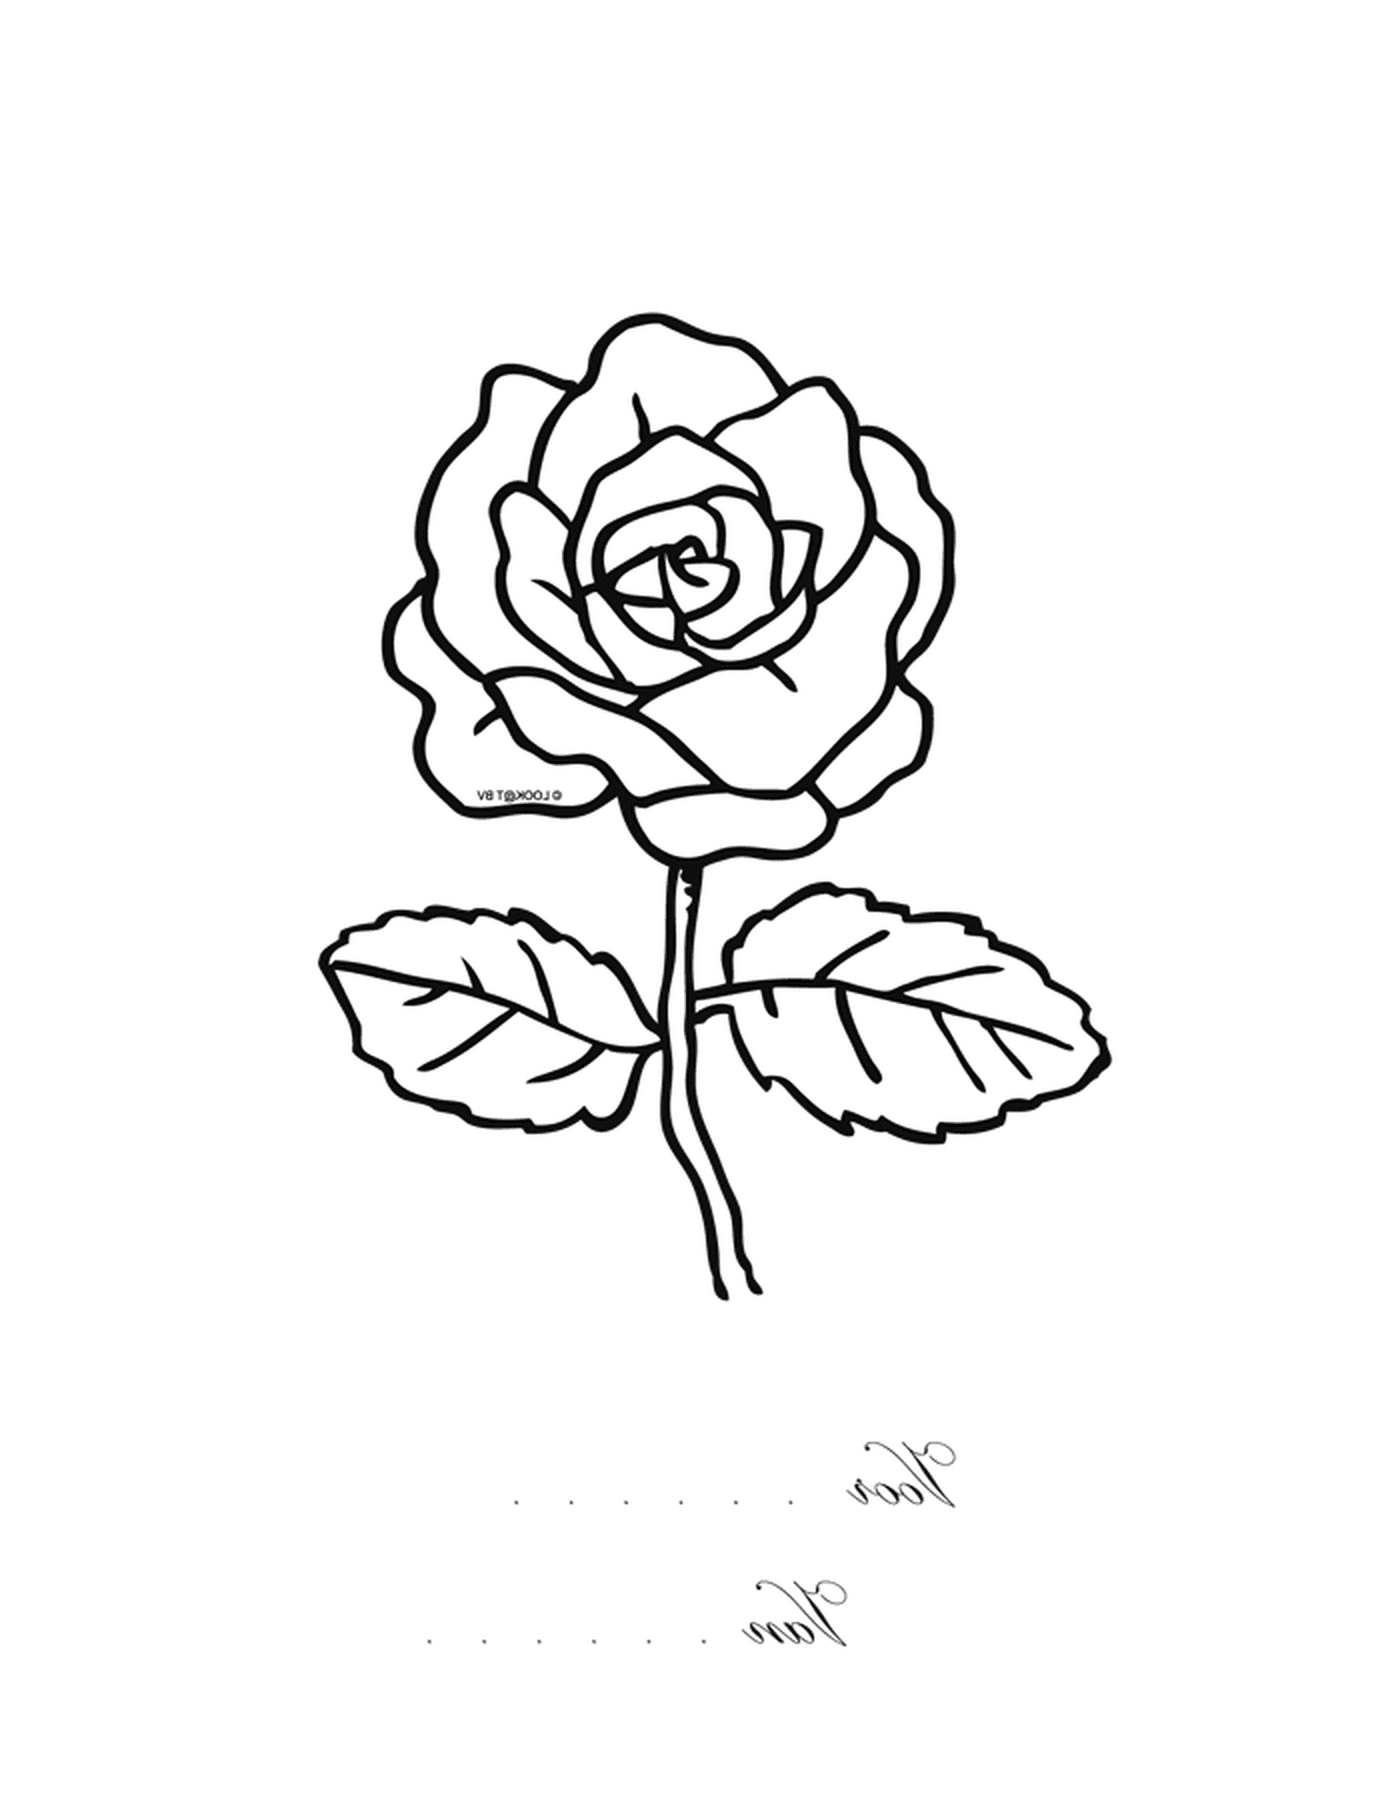  A rose 